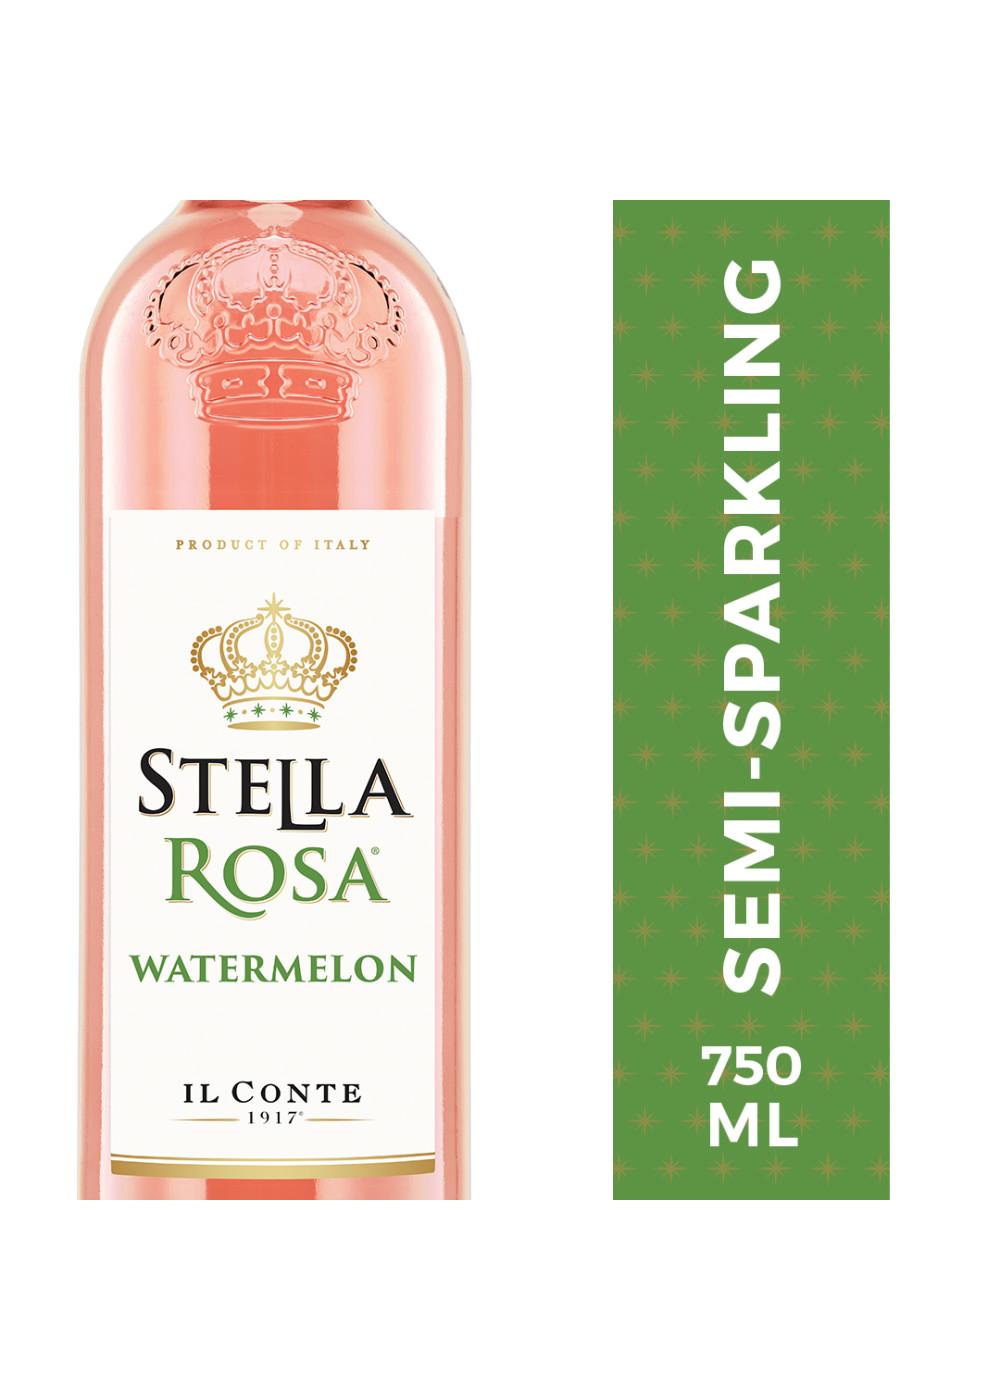 Stella Rosa Watermelon; image 6 of 7